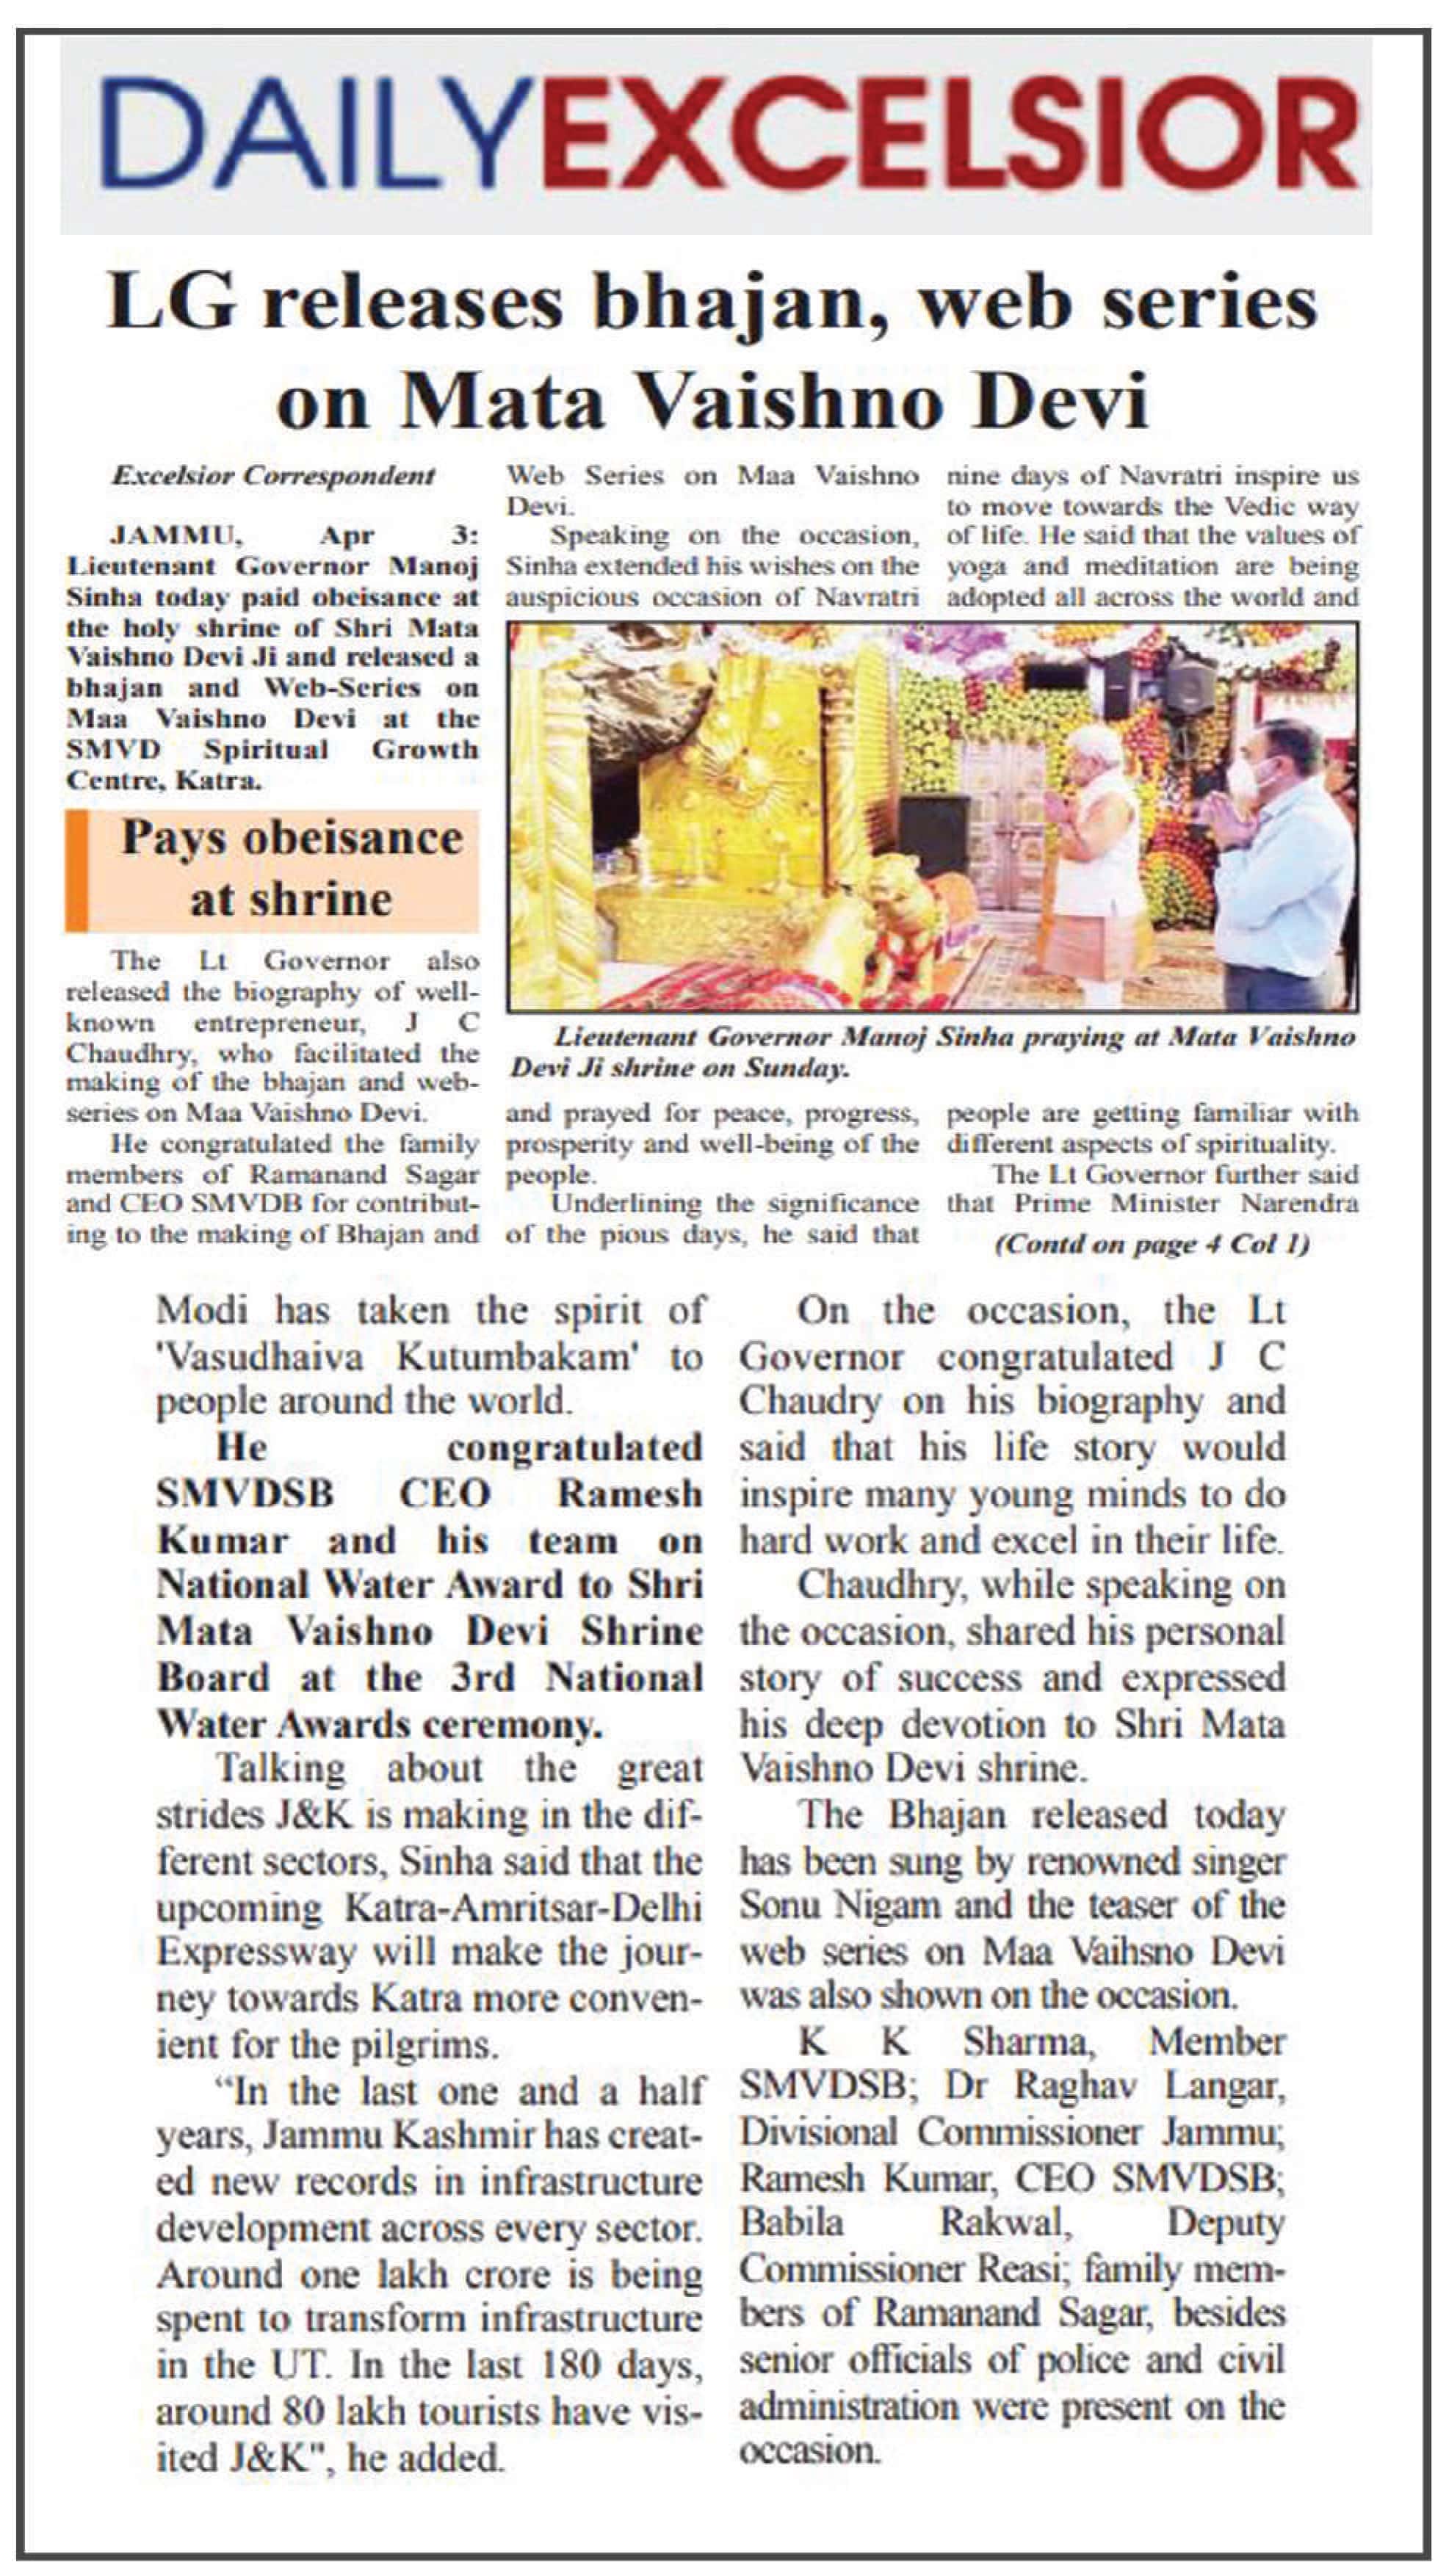 LG Manoj Sinha releases bhajan and web series on Mata Vaishno Devi-- Daily Excelsior